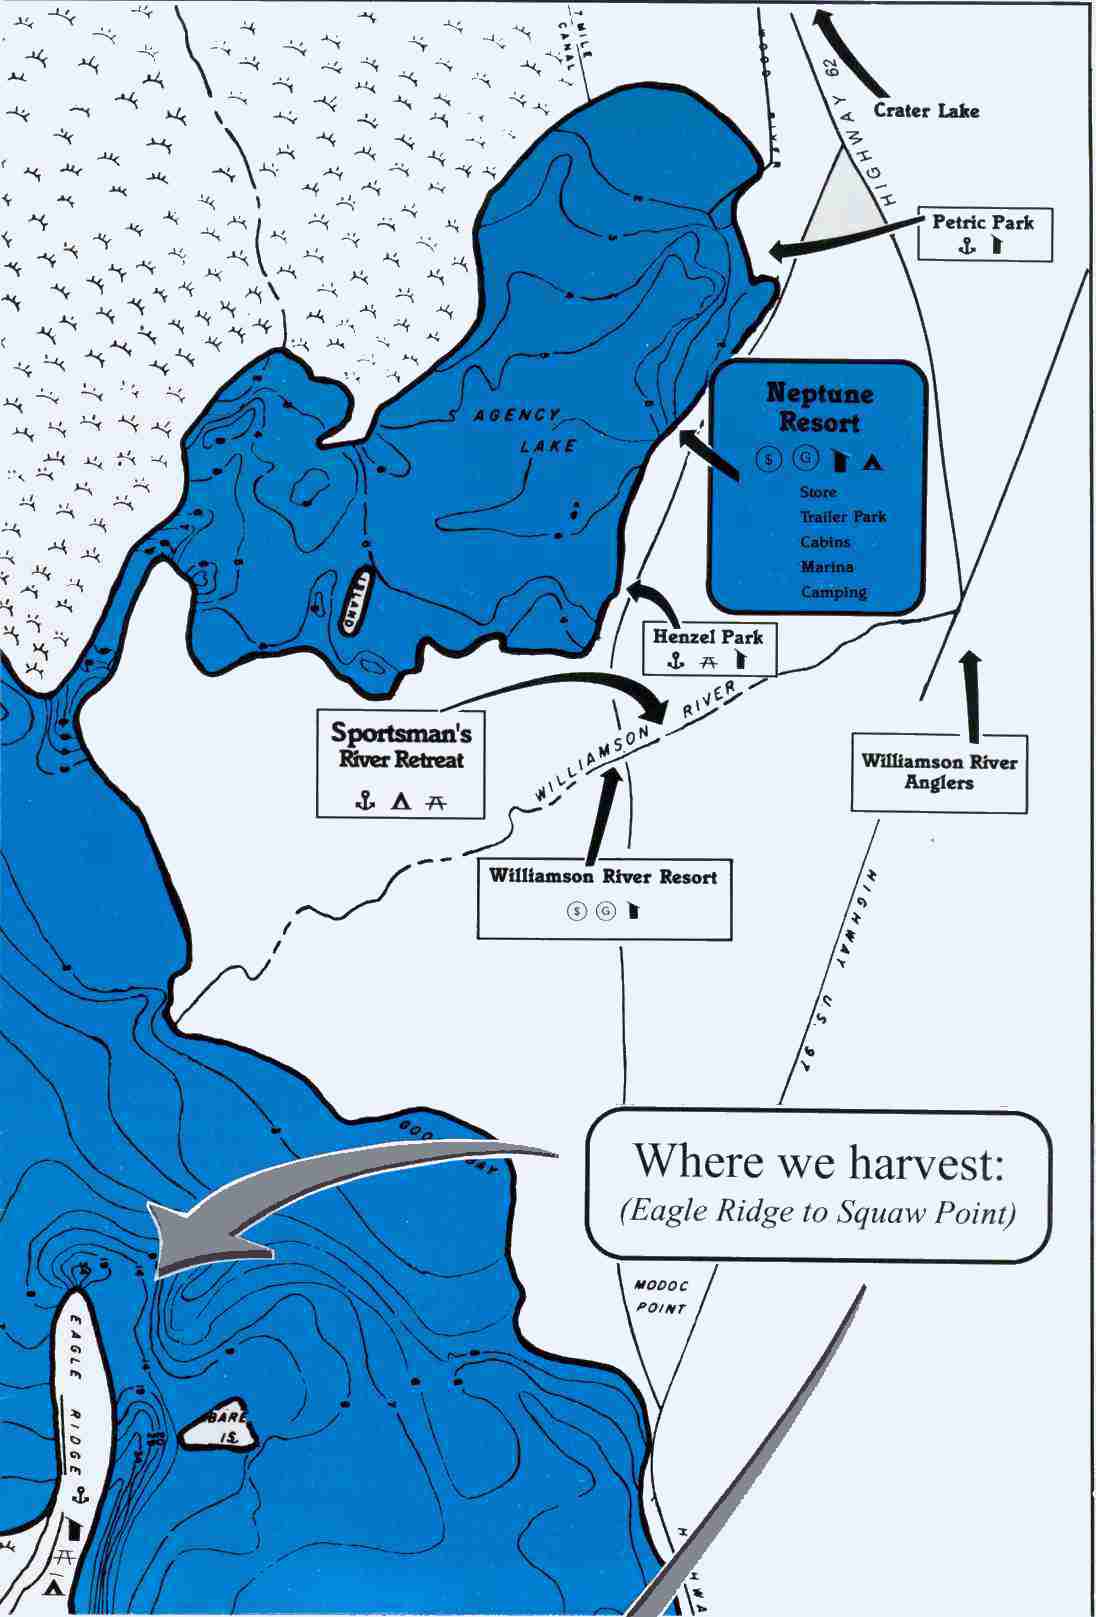 Klamath Lake Map section 2